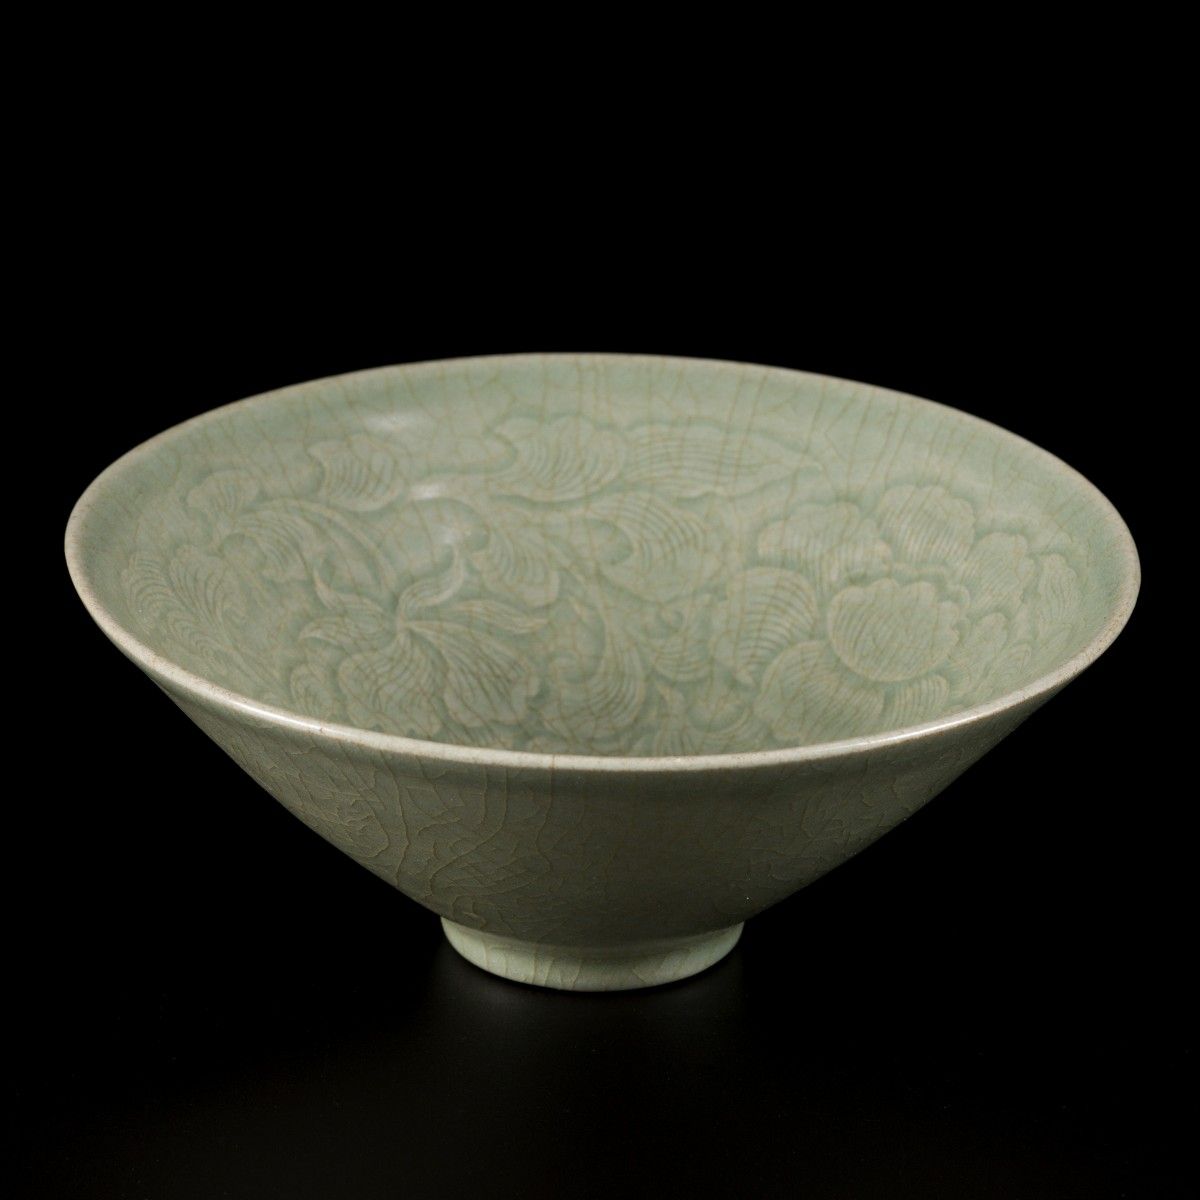 A celadon bowl, Korea, 15 century. Dim. 6 x 16 cm. Estimate: € 1500 - € 2500.